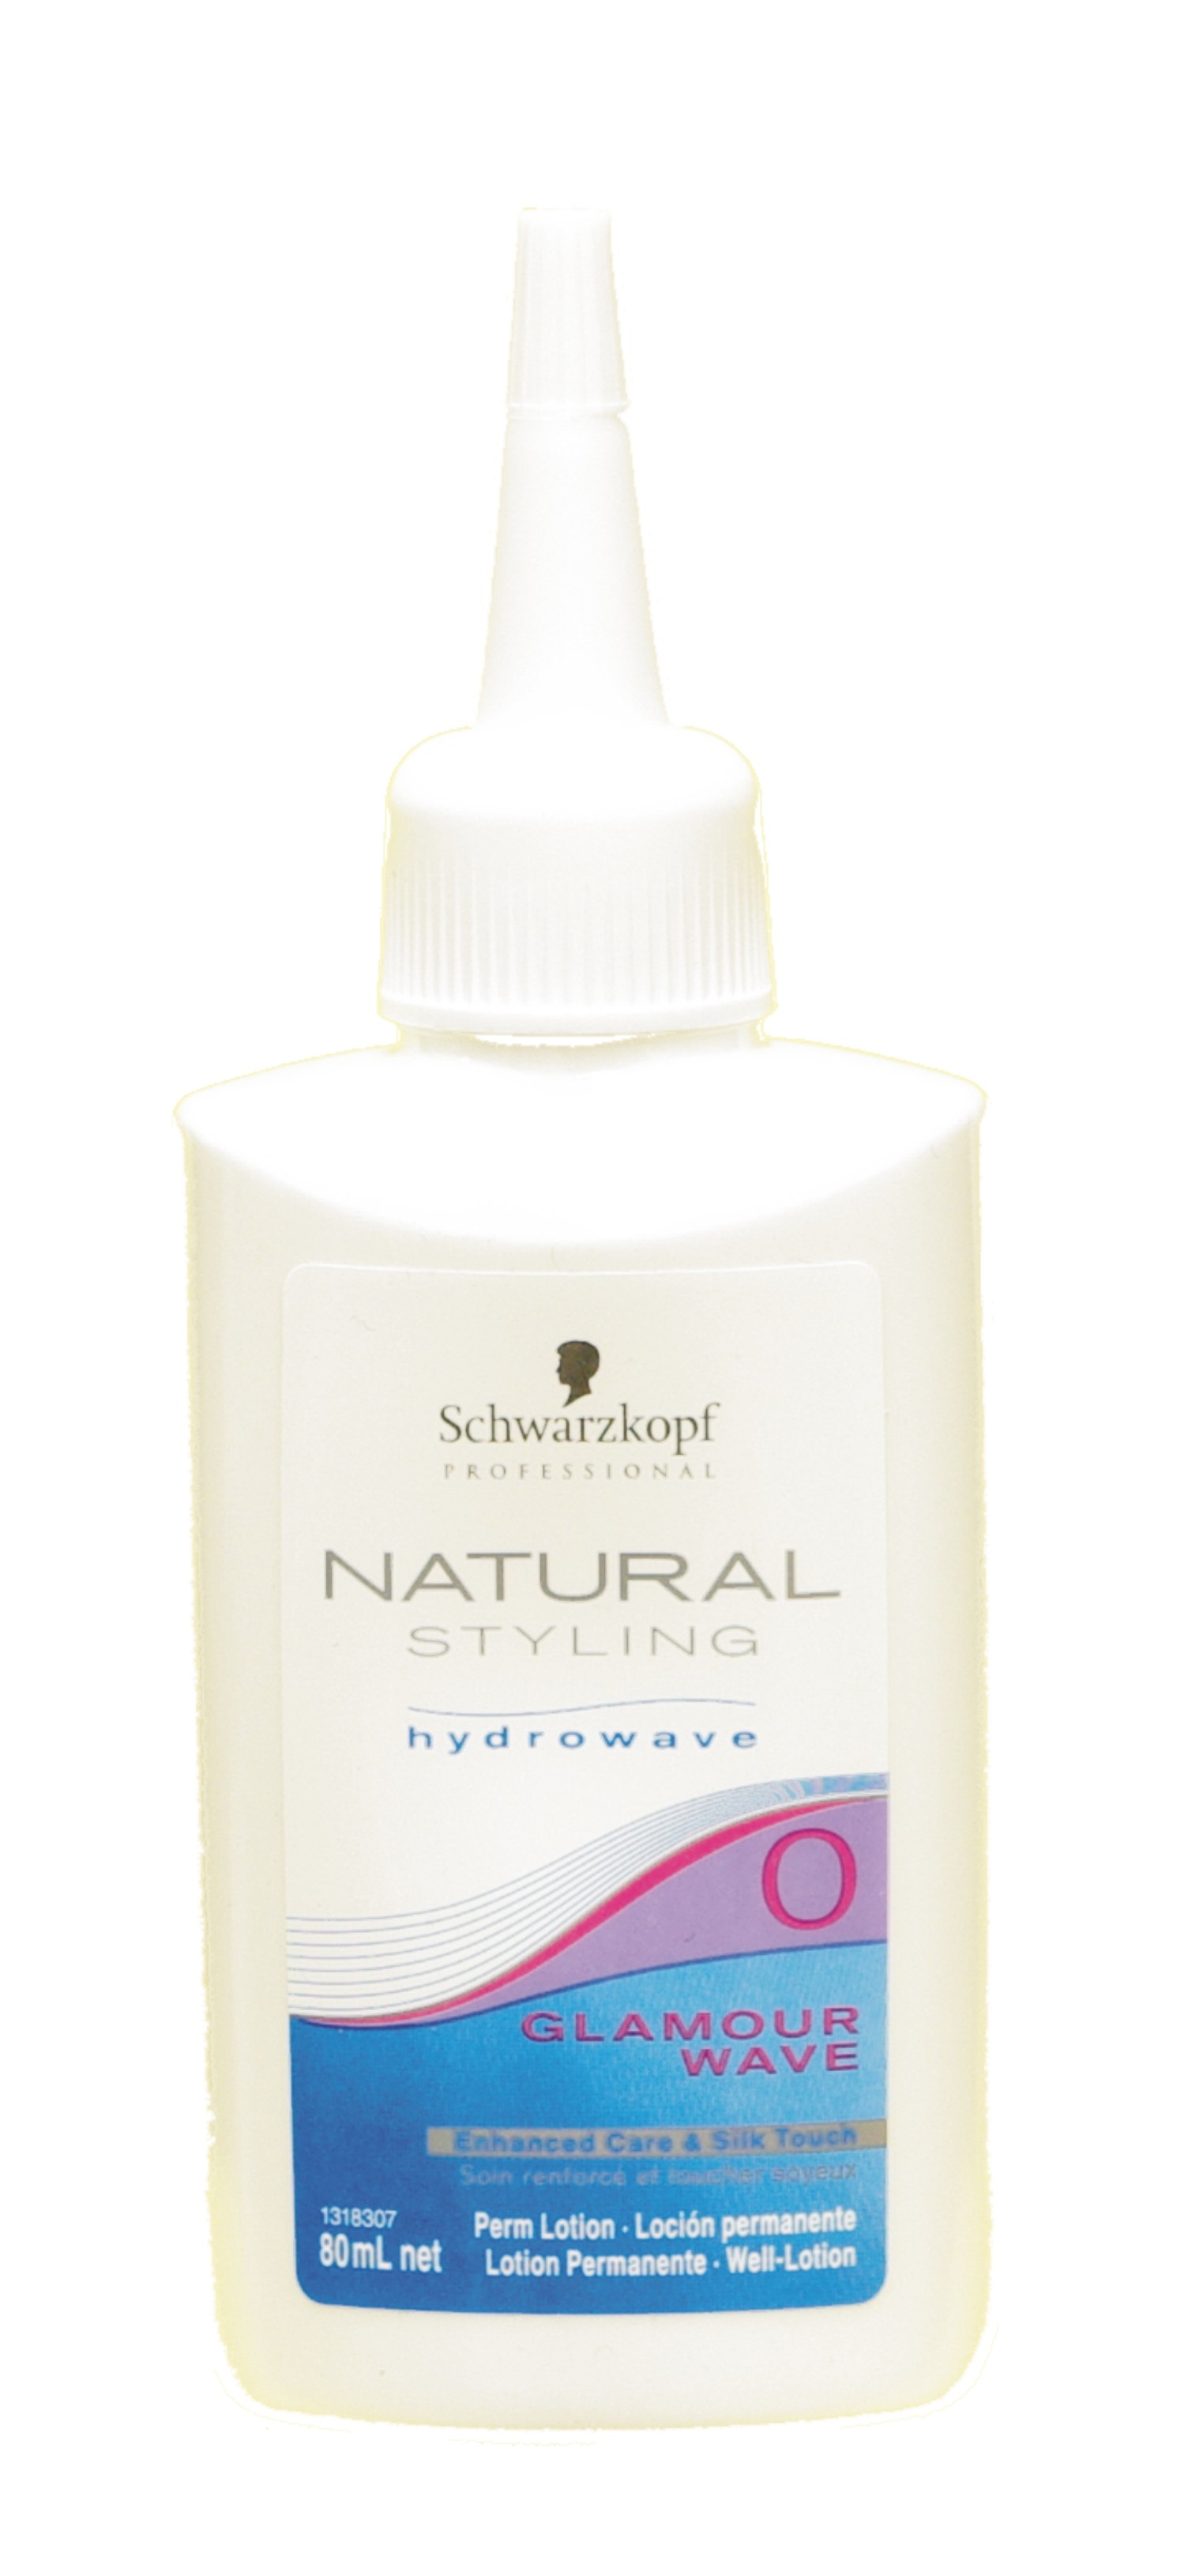 Schwarzkopf NATURAL STYLING Glamour Wave 0, 80 ml